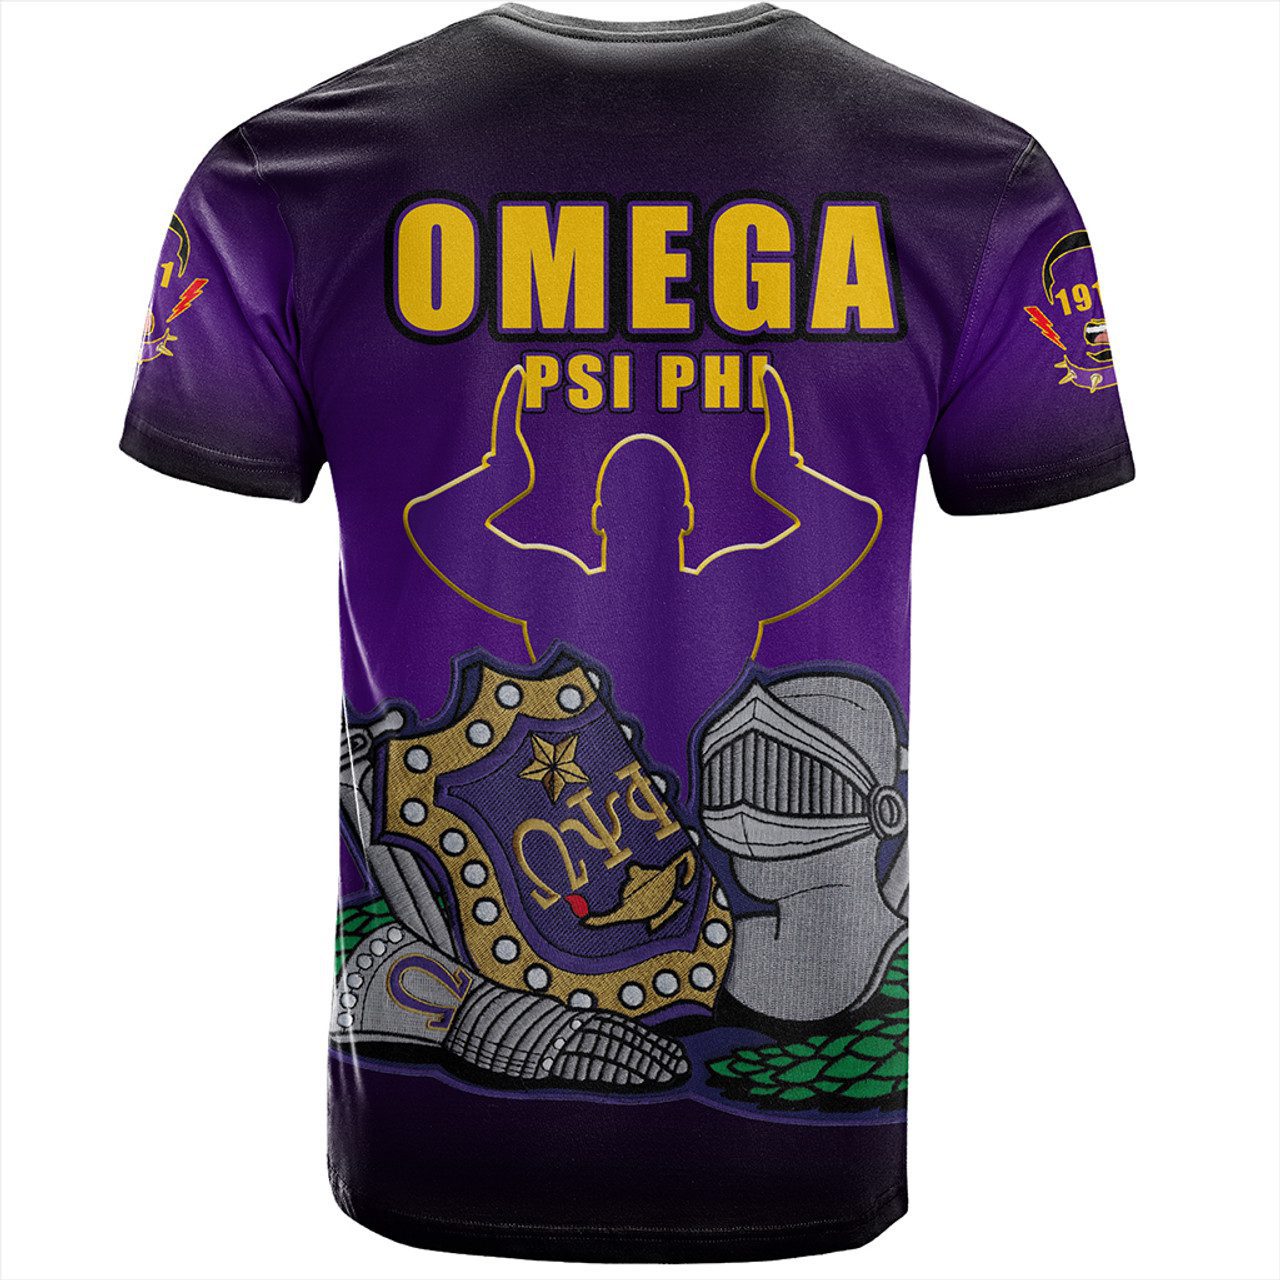 Omega Psi Phi T-Shirt Que